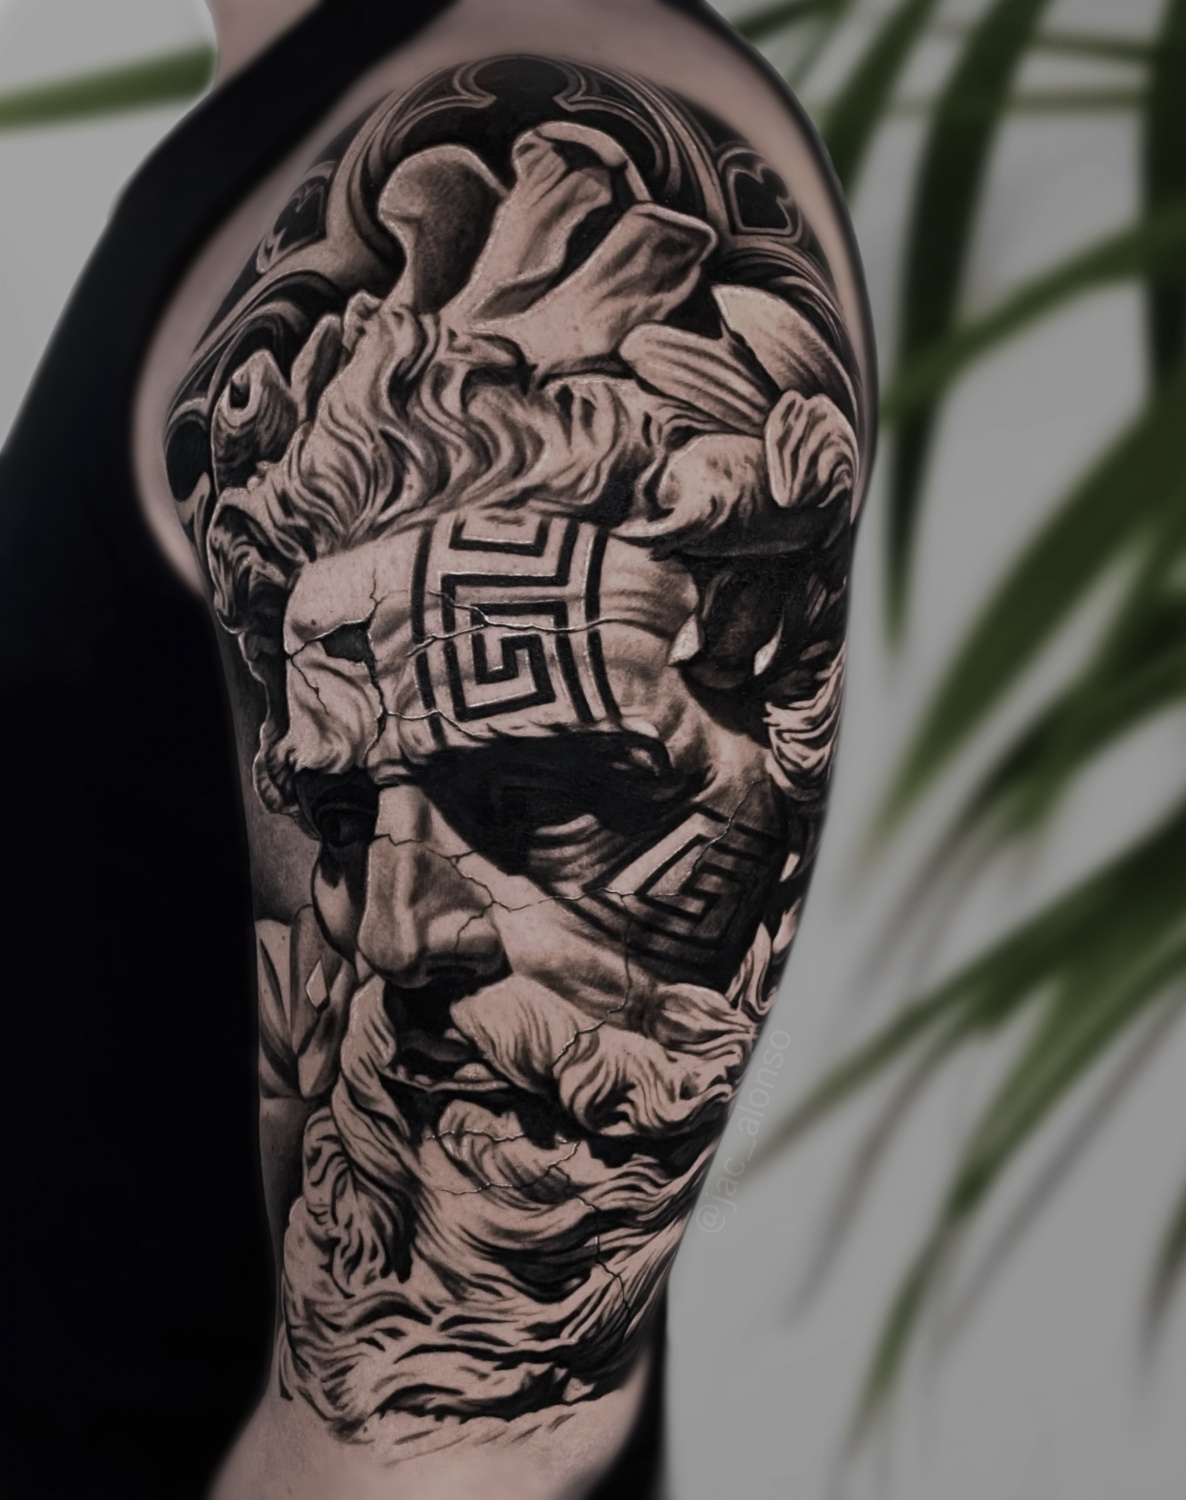 Tattoo artist Jesus Alonso